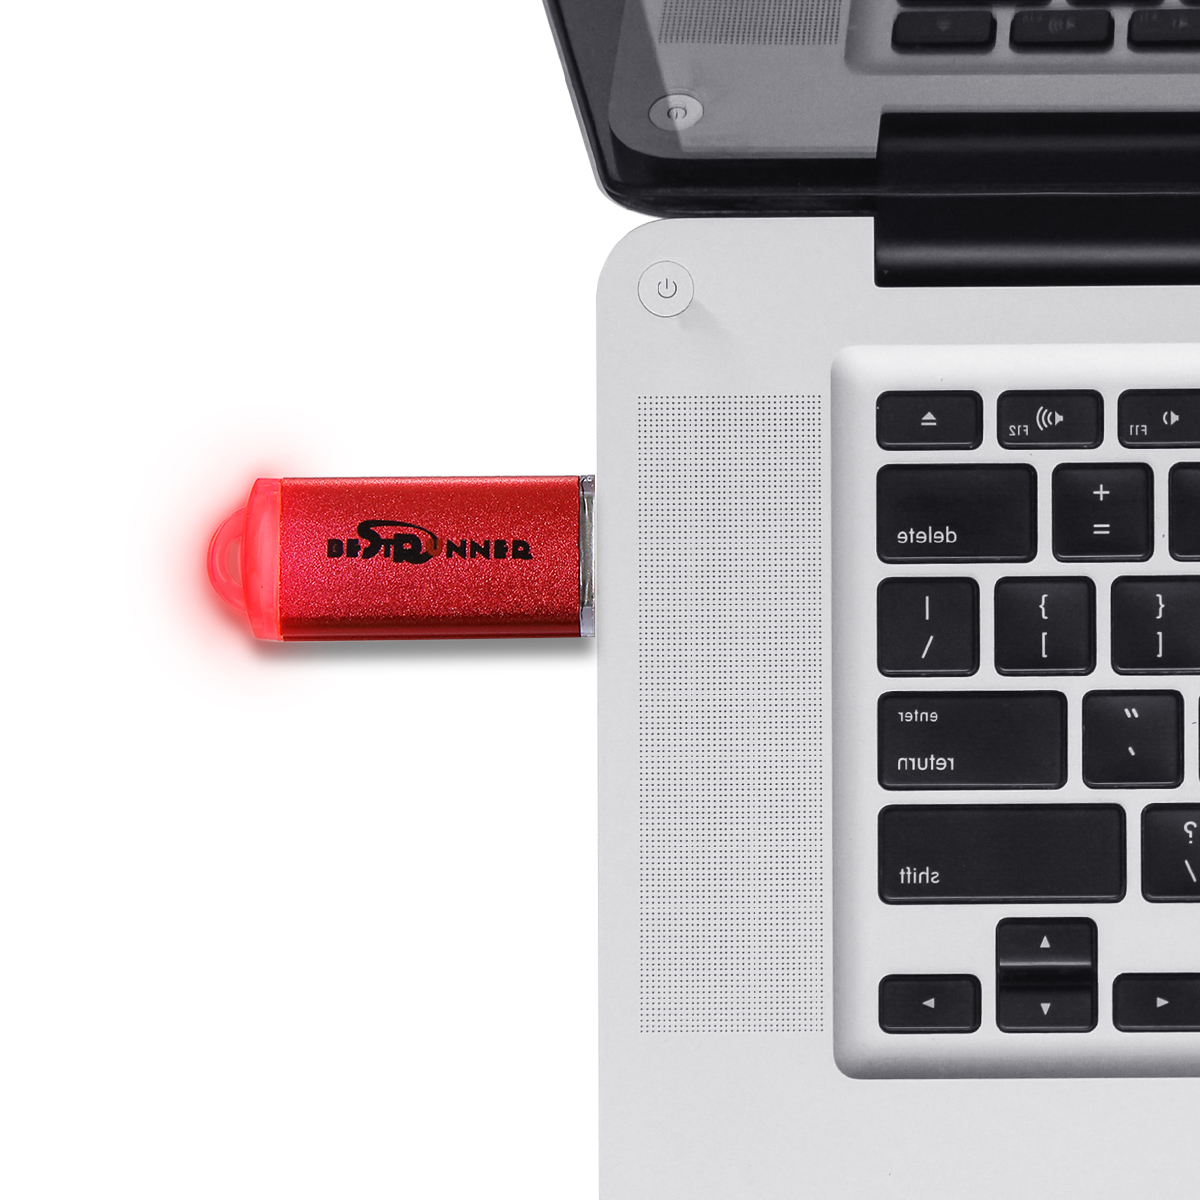 Bestrunner-10Pcs-128MB-USB-20-Flash-Drive-Candy-Red-Color-Memory-Pen-Storage-Thumb-U-Disk-1939063-4